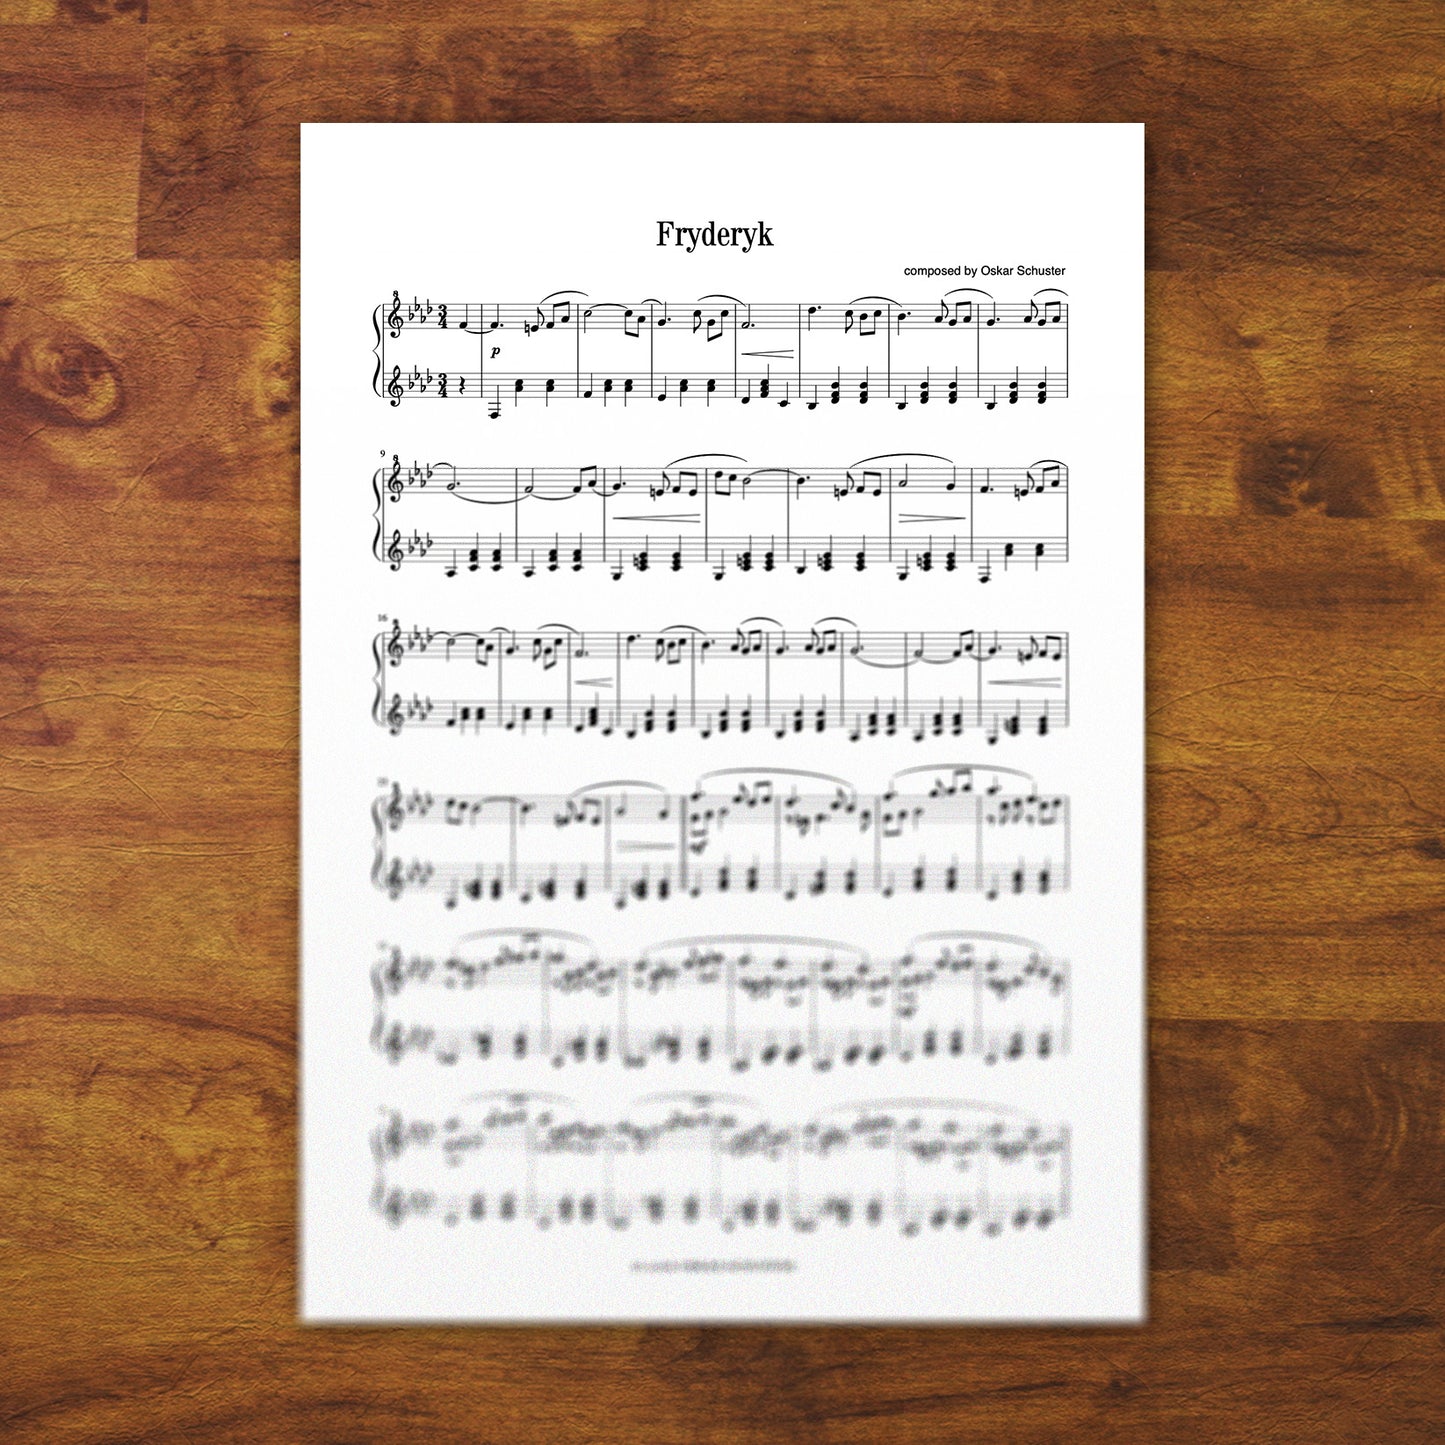 Piano Sheets "Fryderyk"